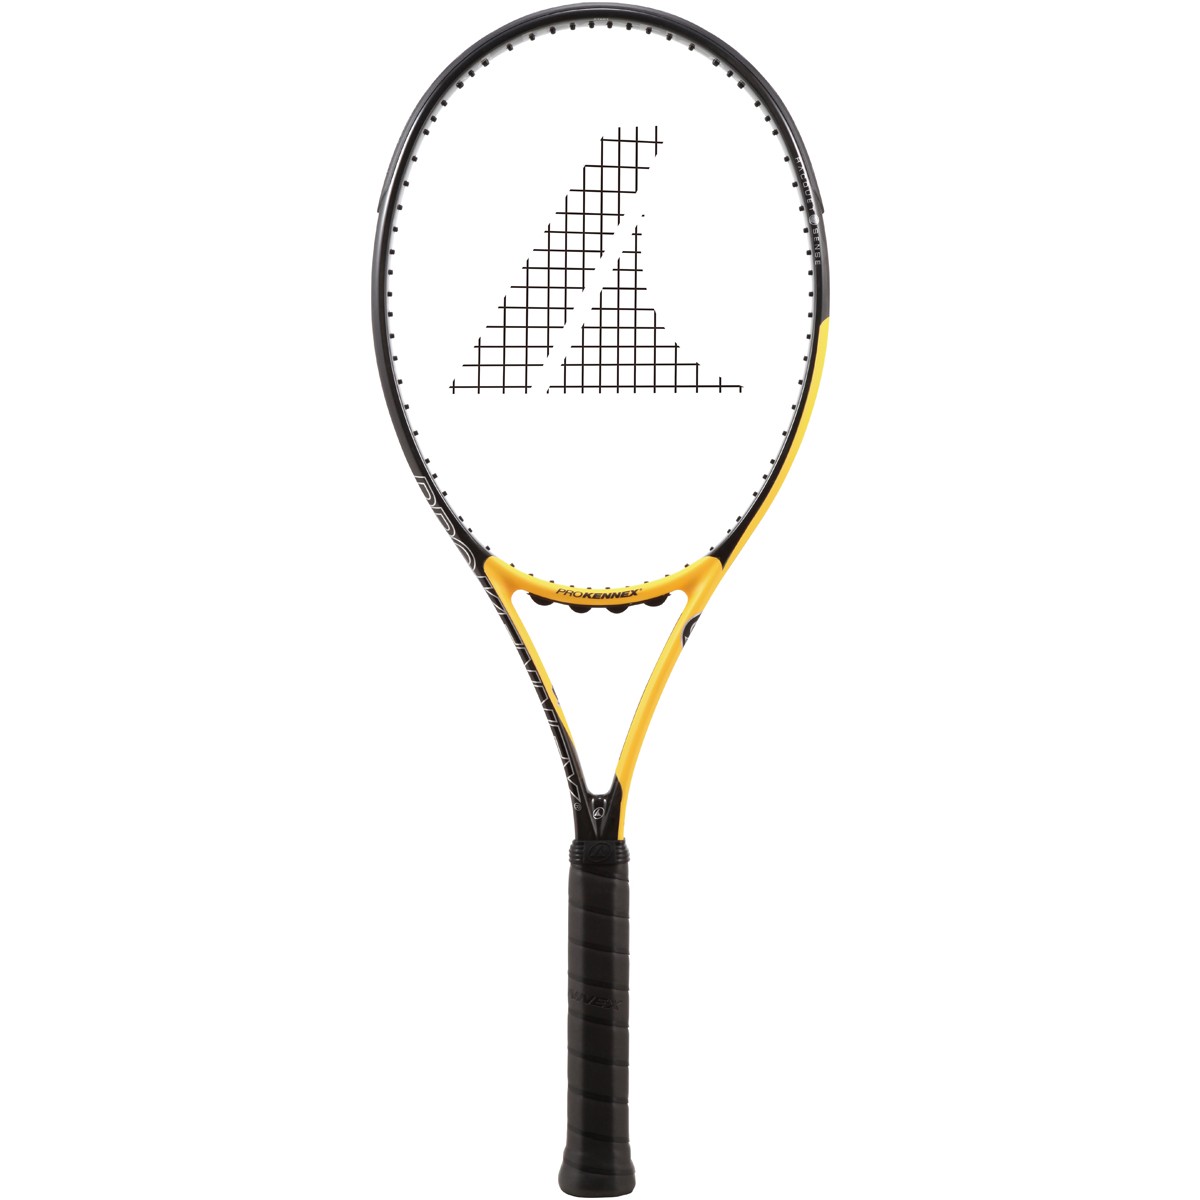 Pro Kennex Black Ace 300g Tennis Racket